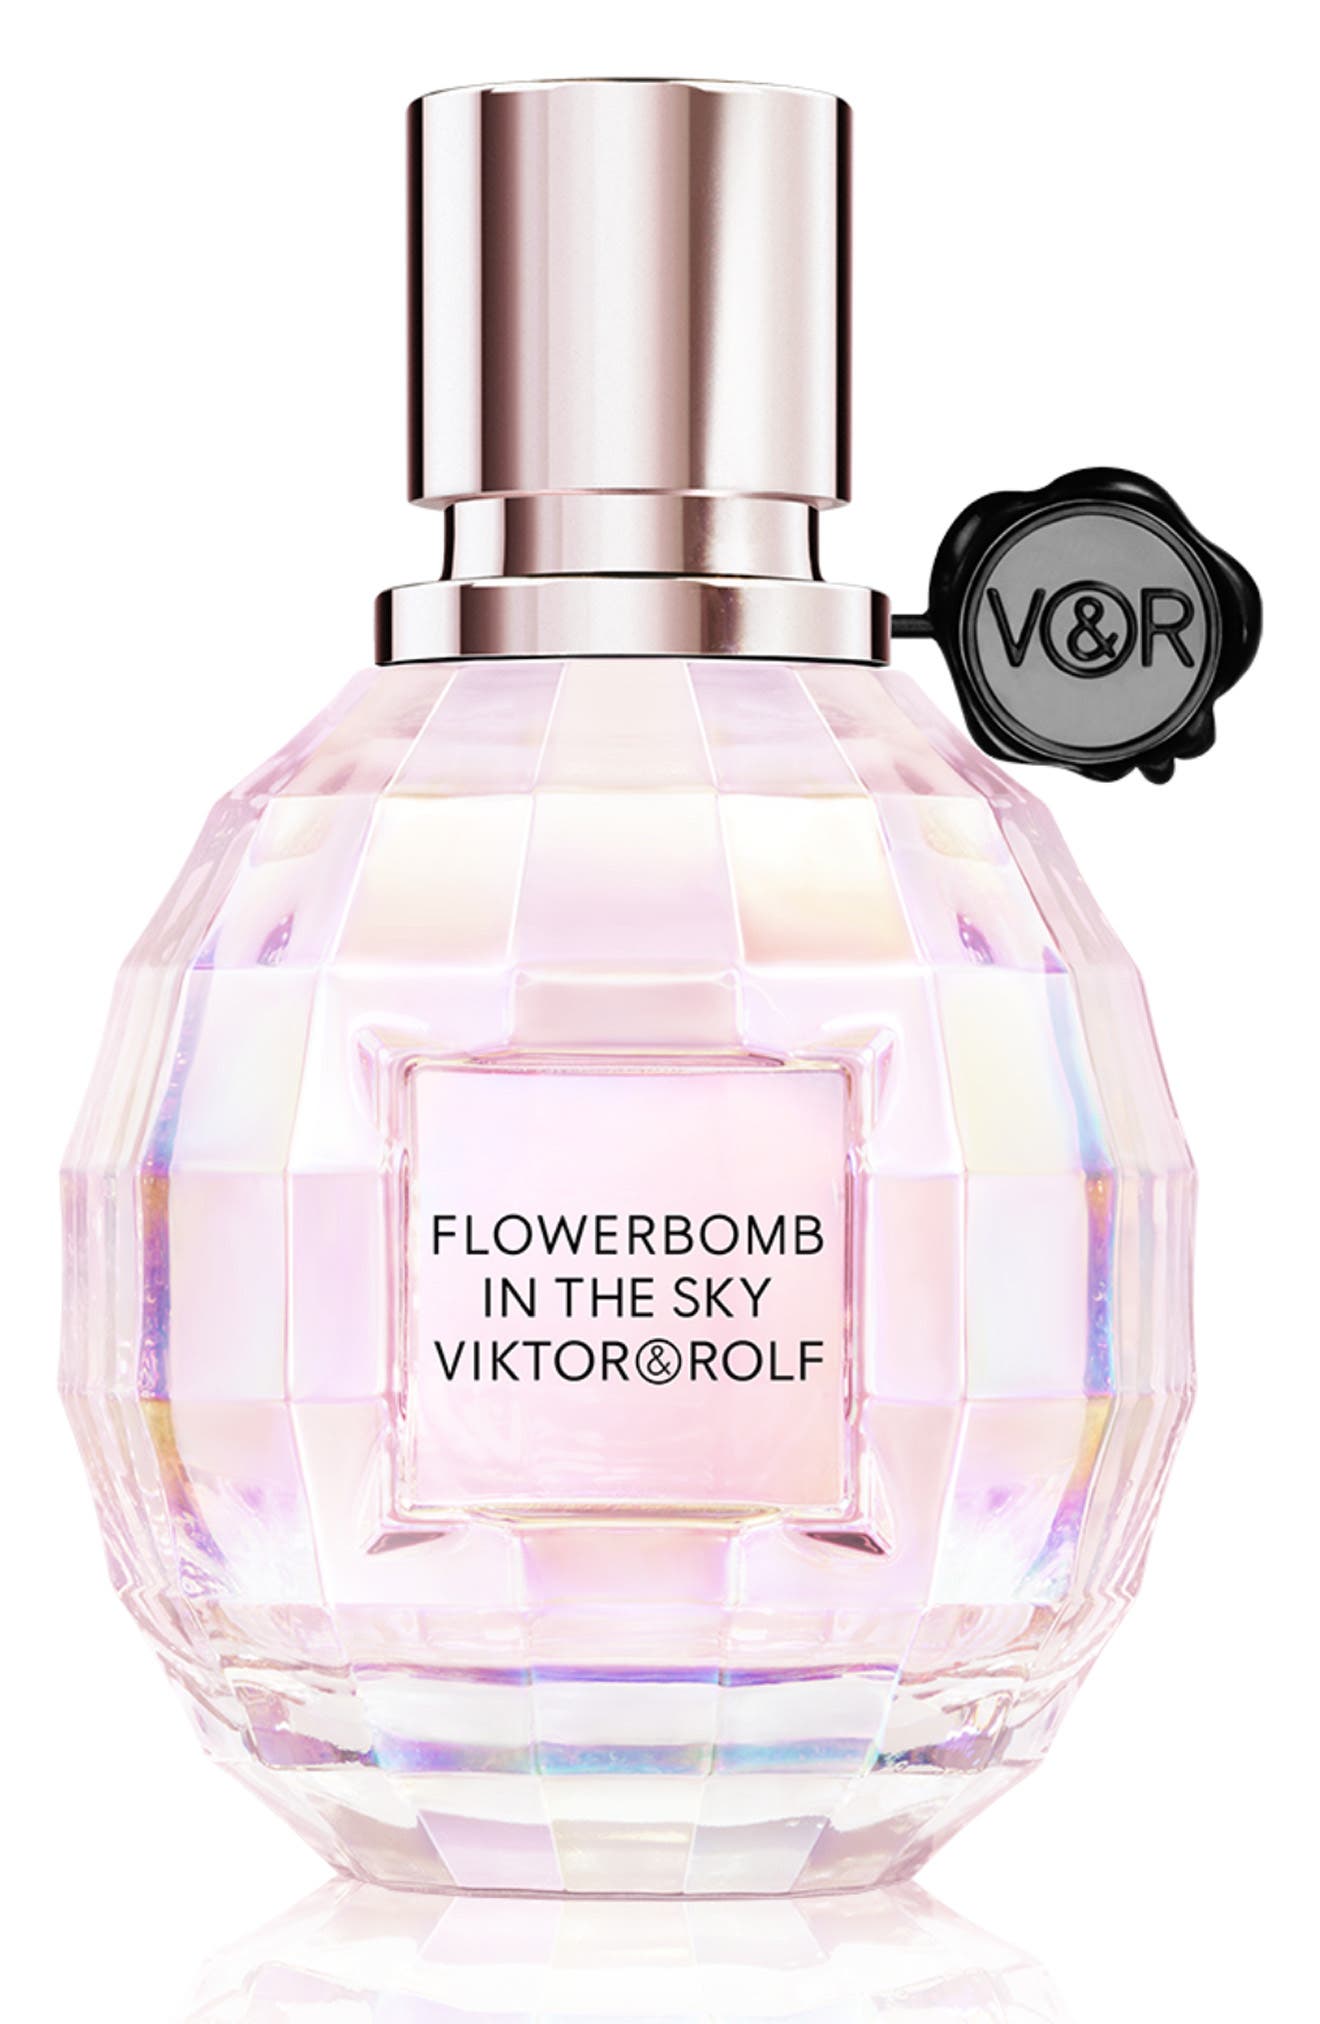 Viktor & Rolf Flowerbomb In The Sky Eau de Parfum at Nordstrom